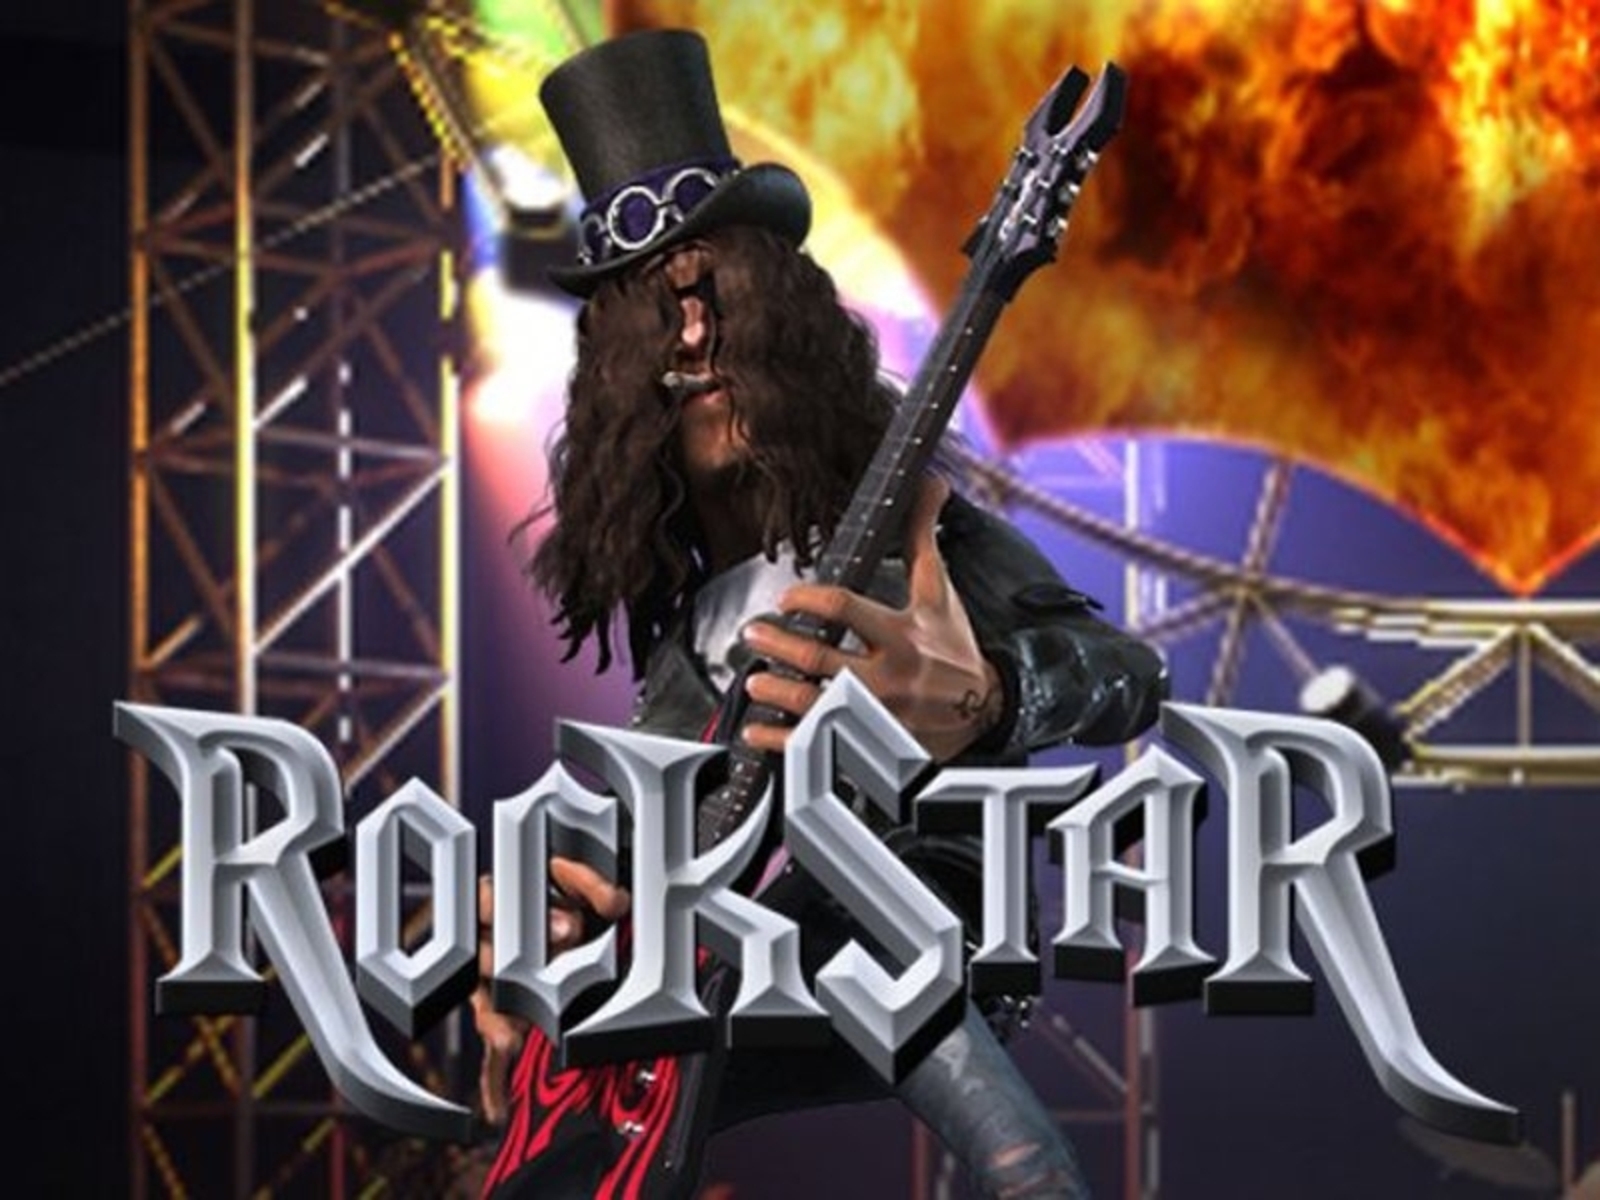 RockStar demo